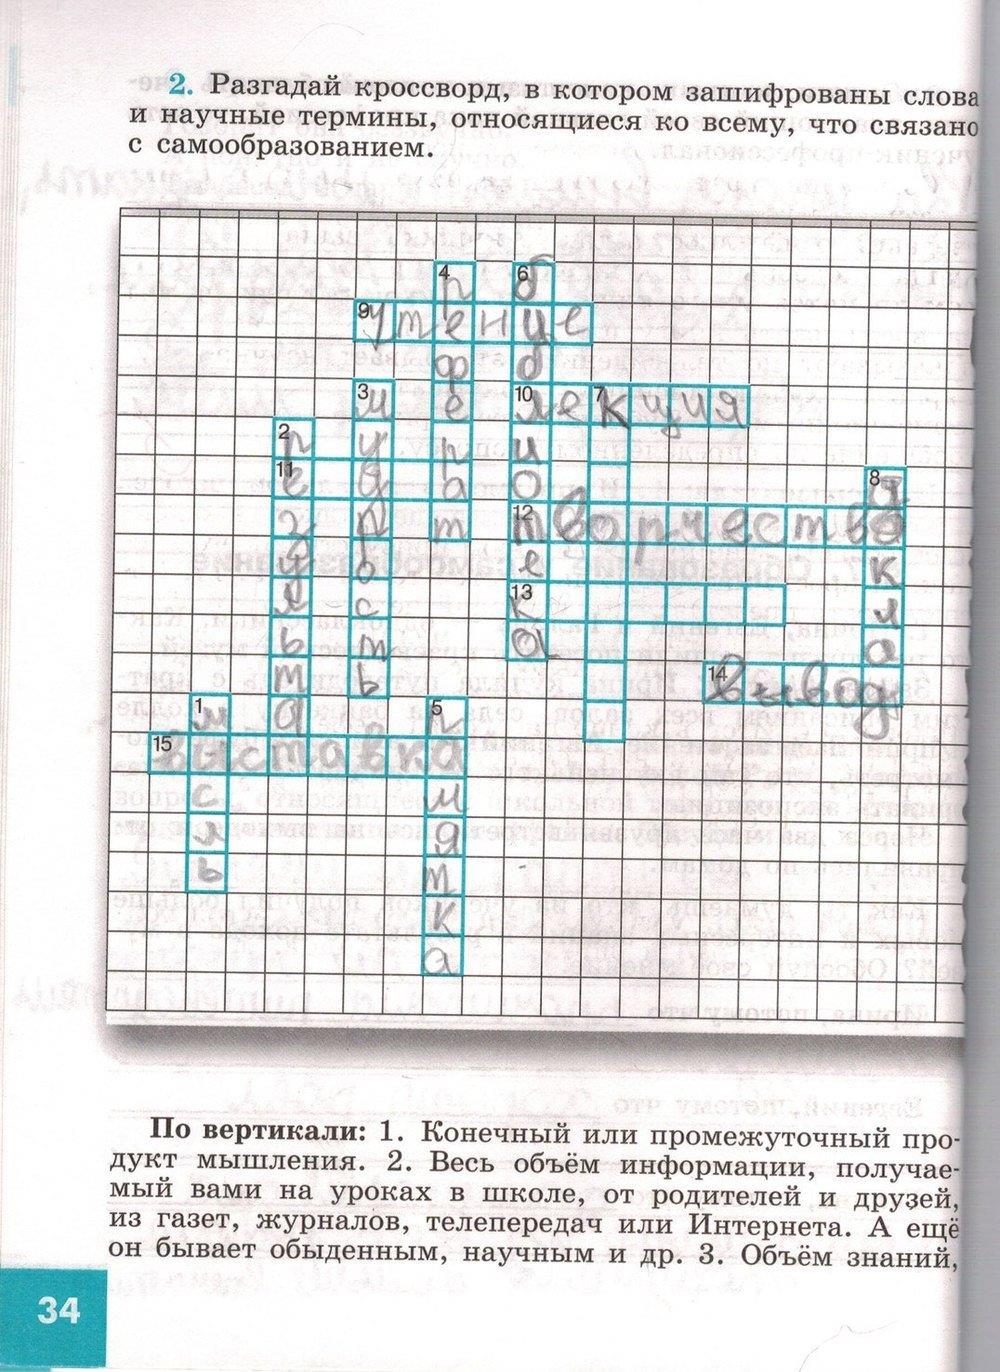 гдз 5 класс рабочая тетрадь страница 34 обществознание Иванова, Хотеенкова